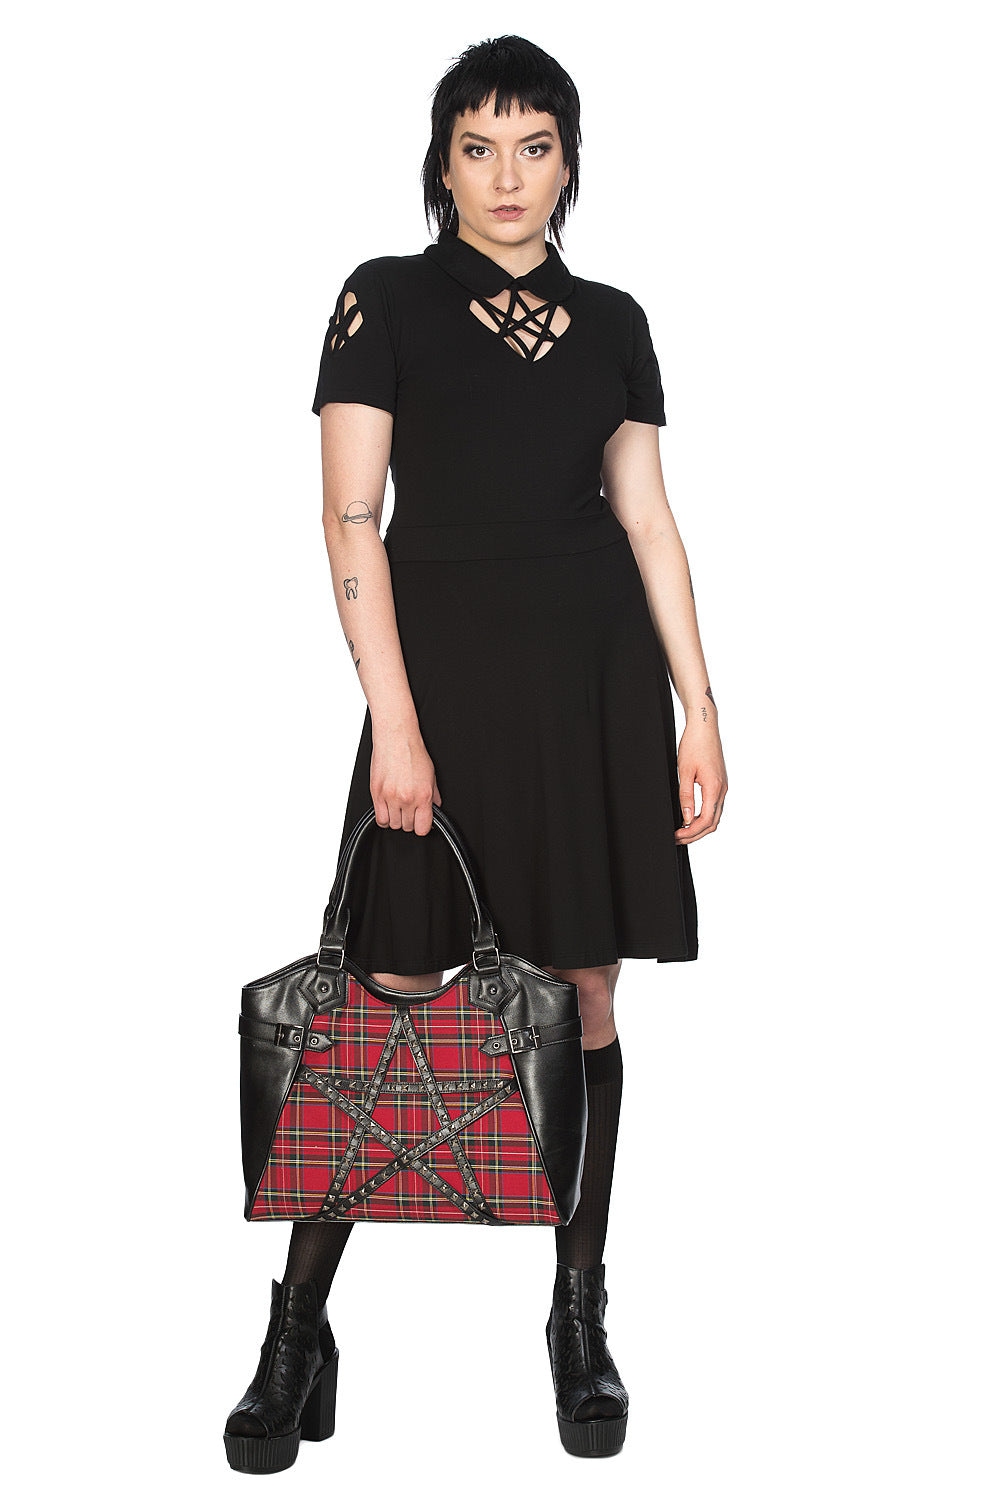 Alternative model in black dress holding red tartan hand bag with studded pentagram 